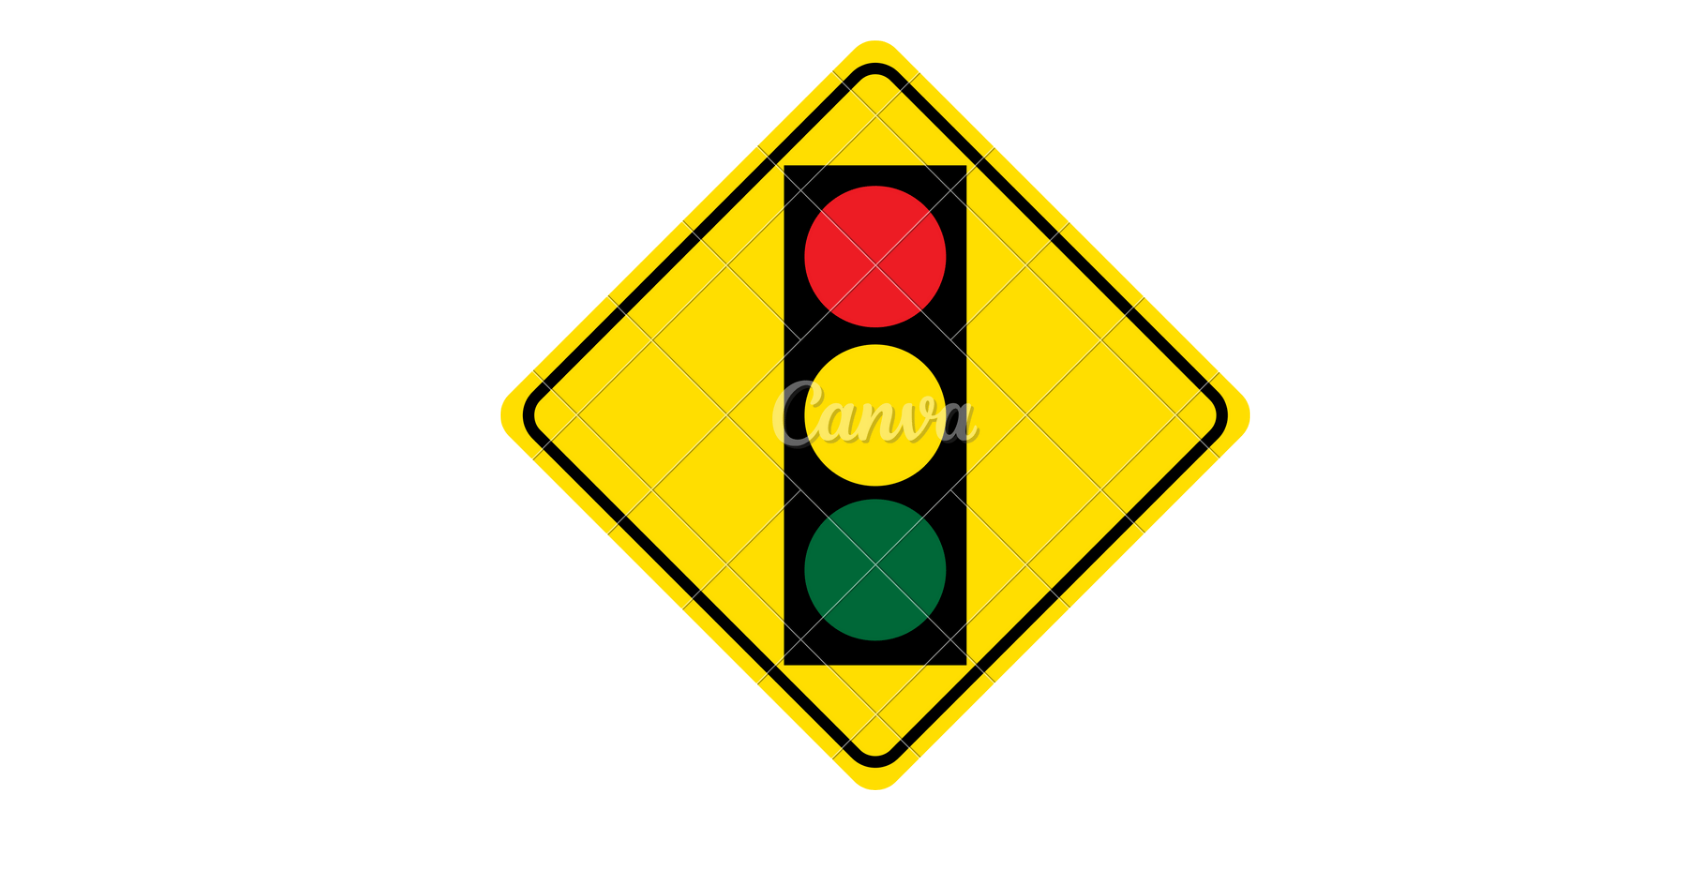 Traffic Signal Ahead Signs